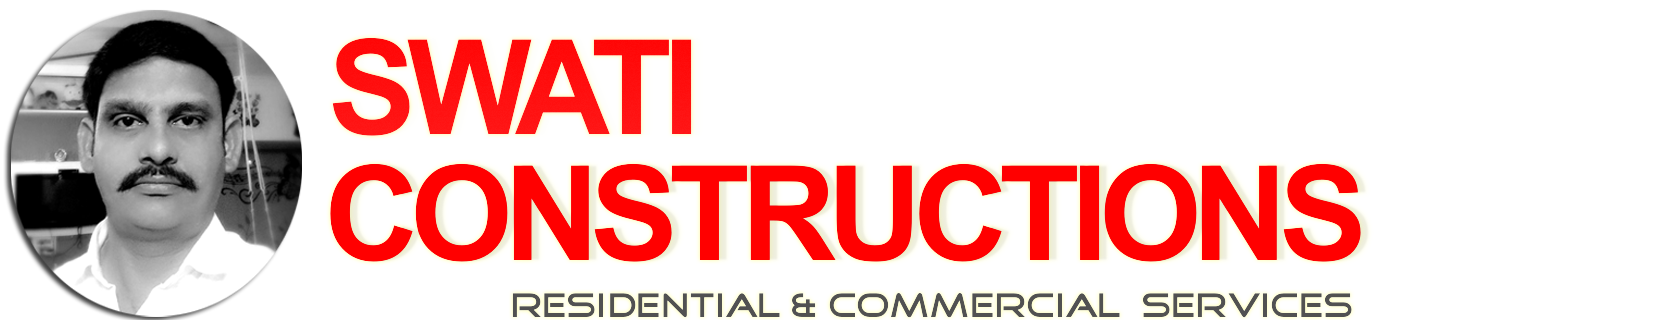 SWATI CONSTRUCTIONS - Logo